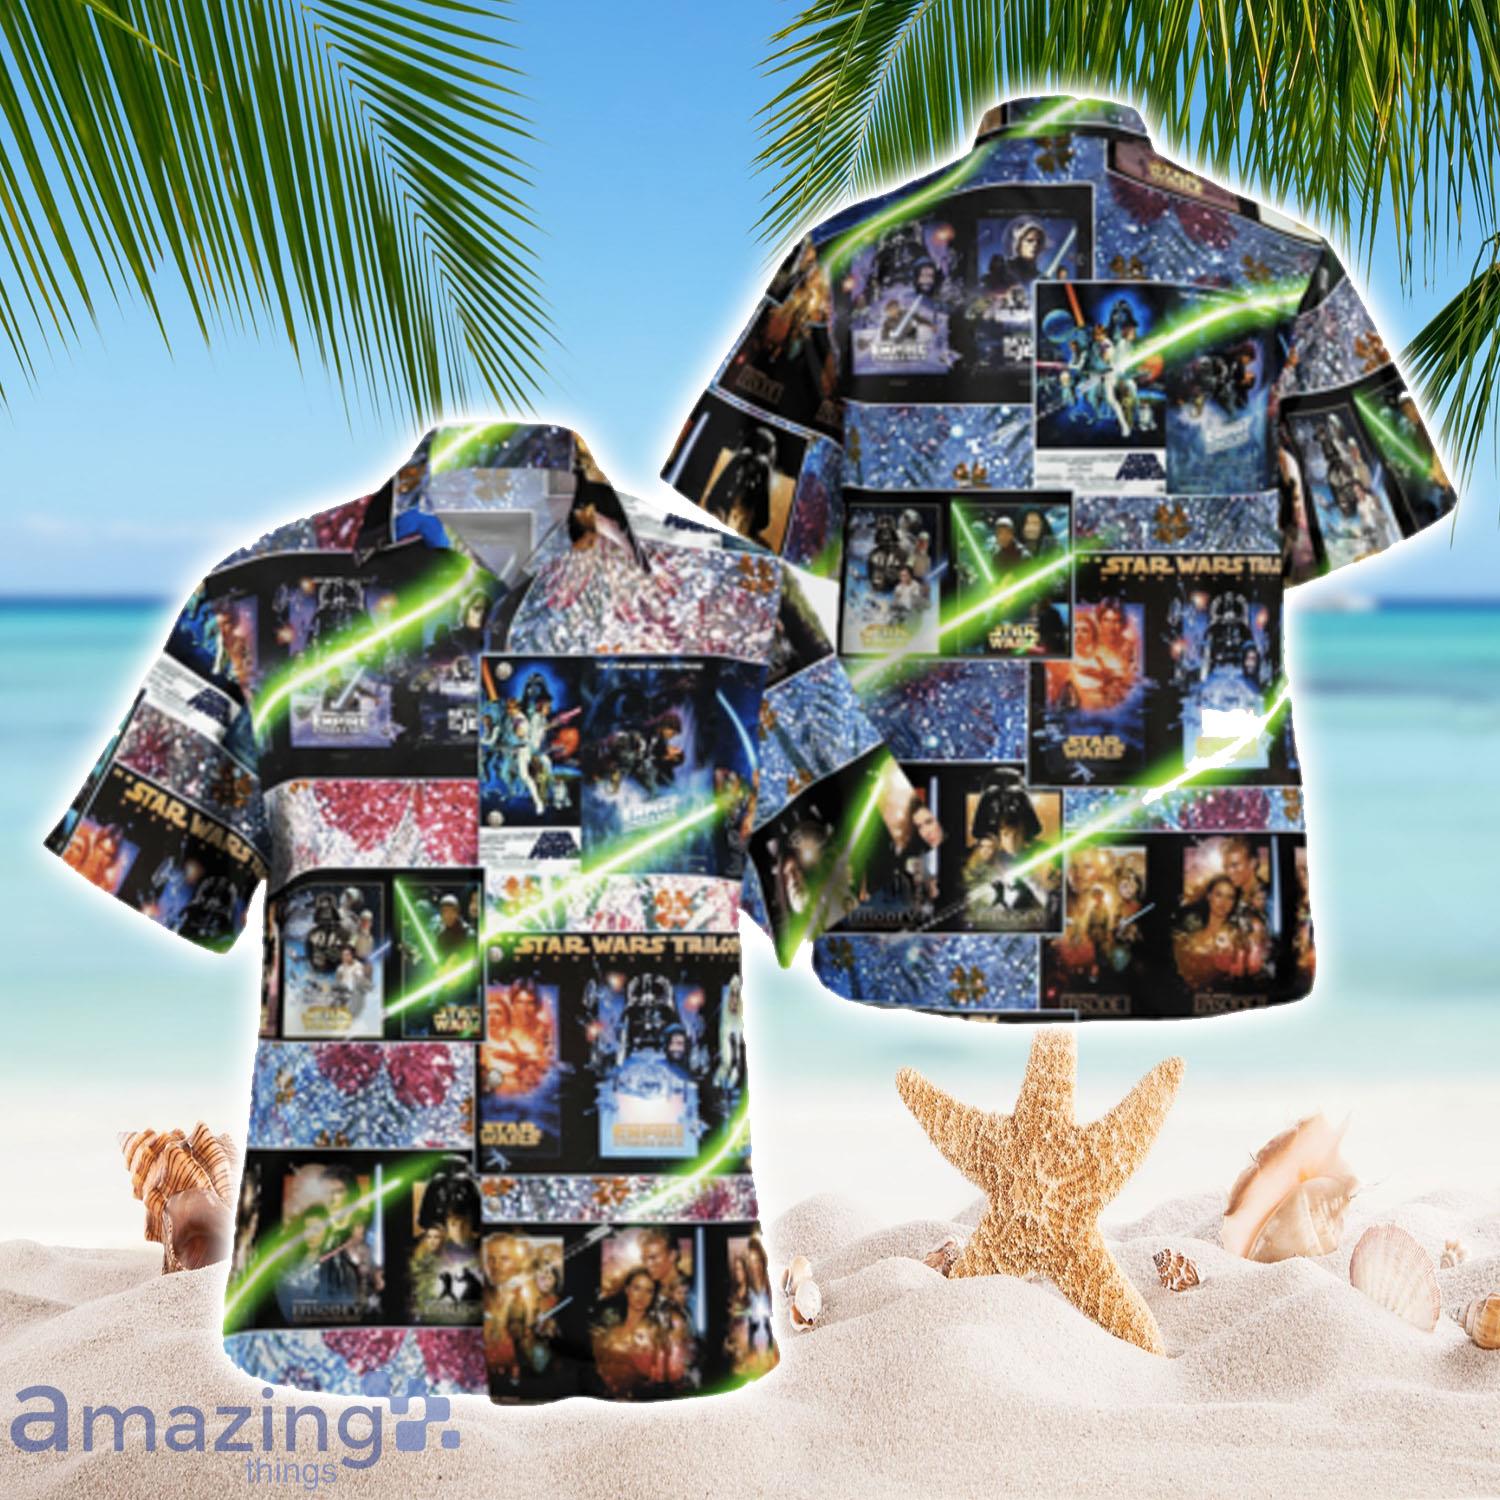 The Original Trilogy Star Wars Hawaiian Shirts - The Original Trilogy Star Wars Hawaiian Shirts